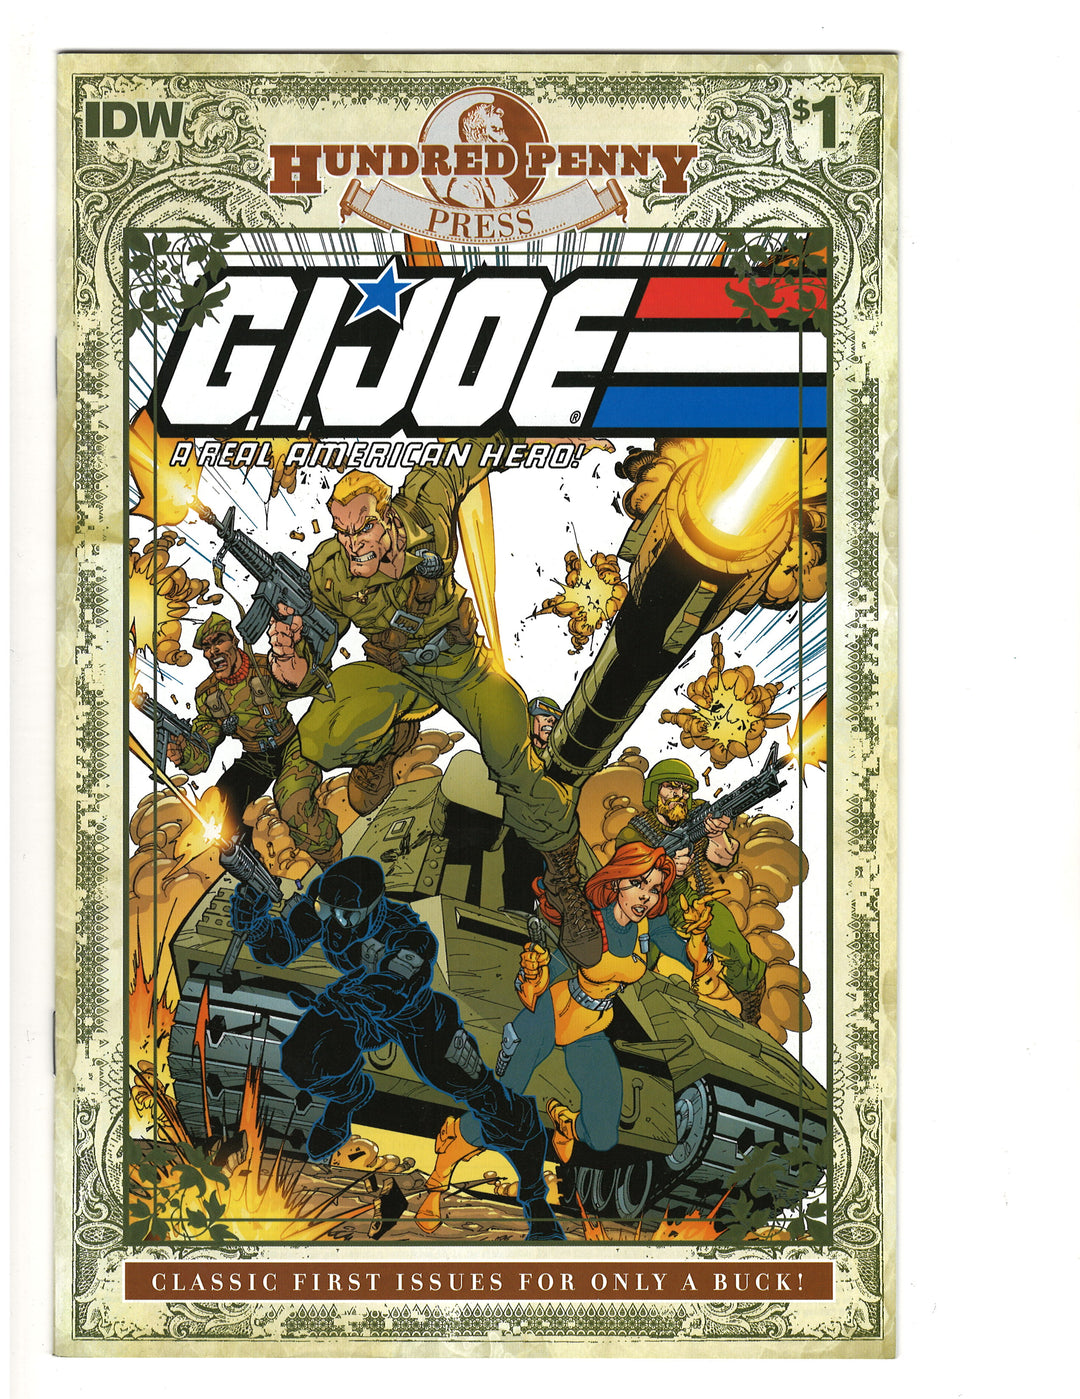 G.I. Joe Real American Hero (2011) Hundred Penny Press Edition #1